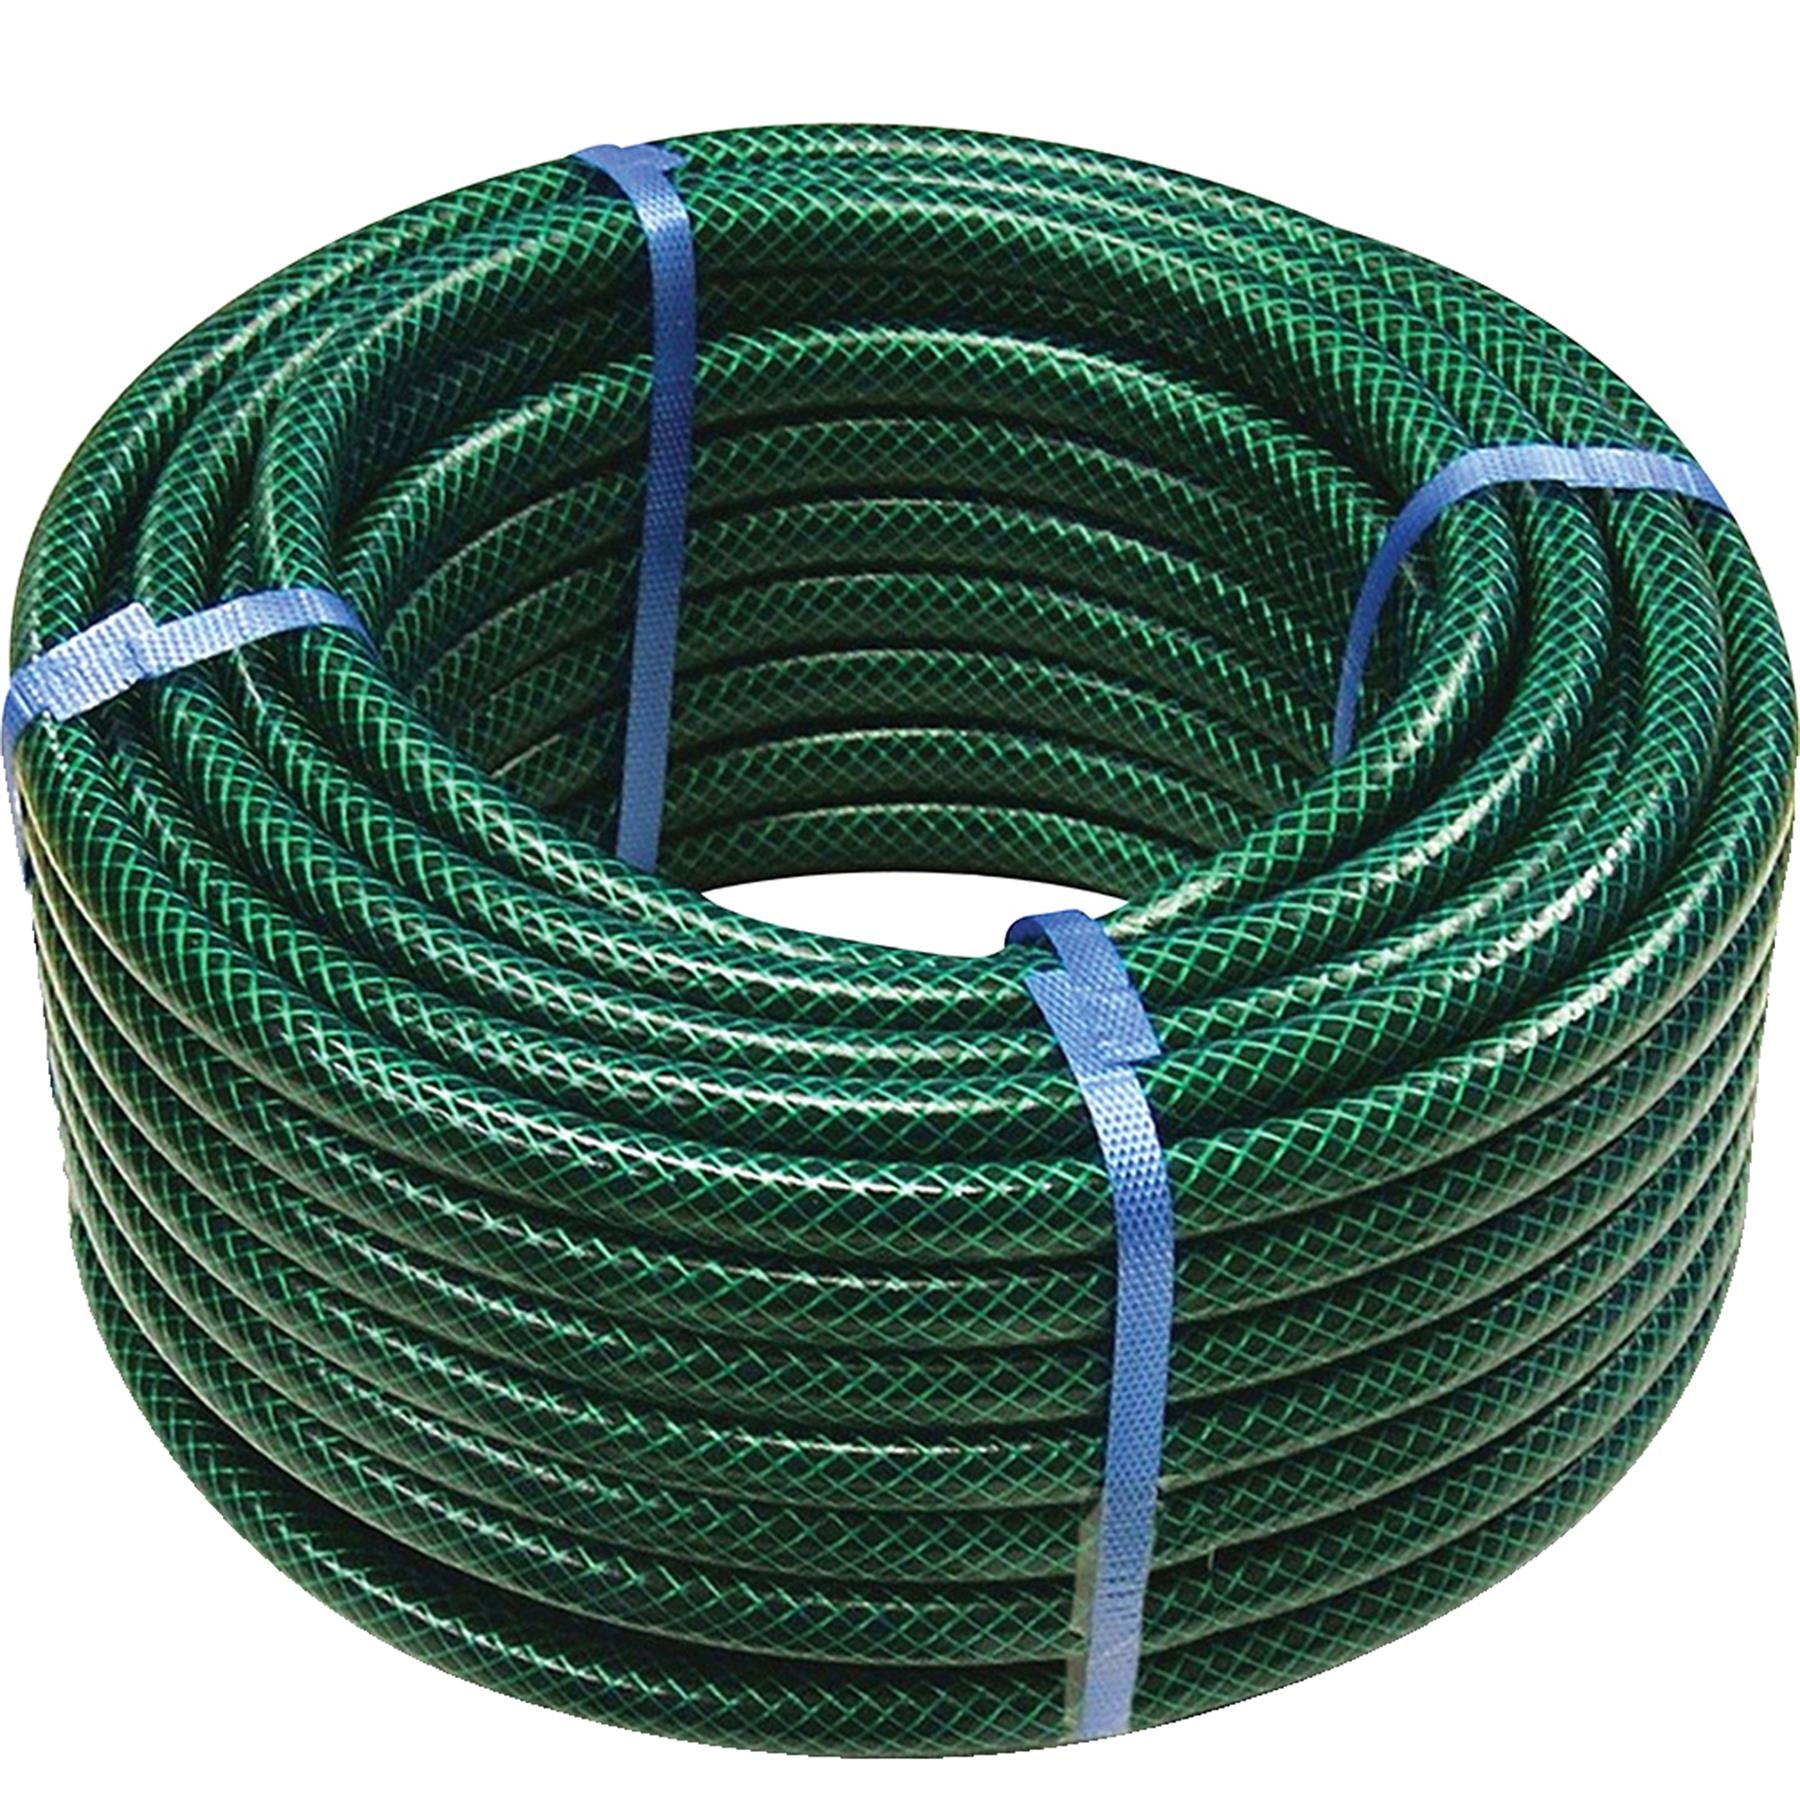 50M Garden Hose Pipe Reinforced Braided PVC Watering Hosepipe Reel Green 1/2"